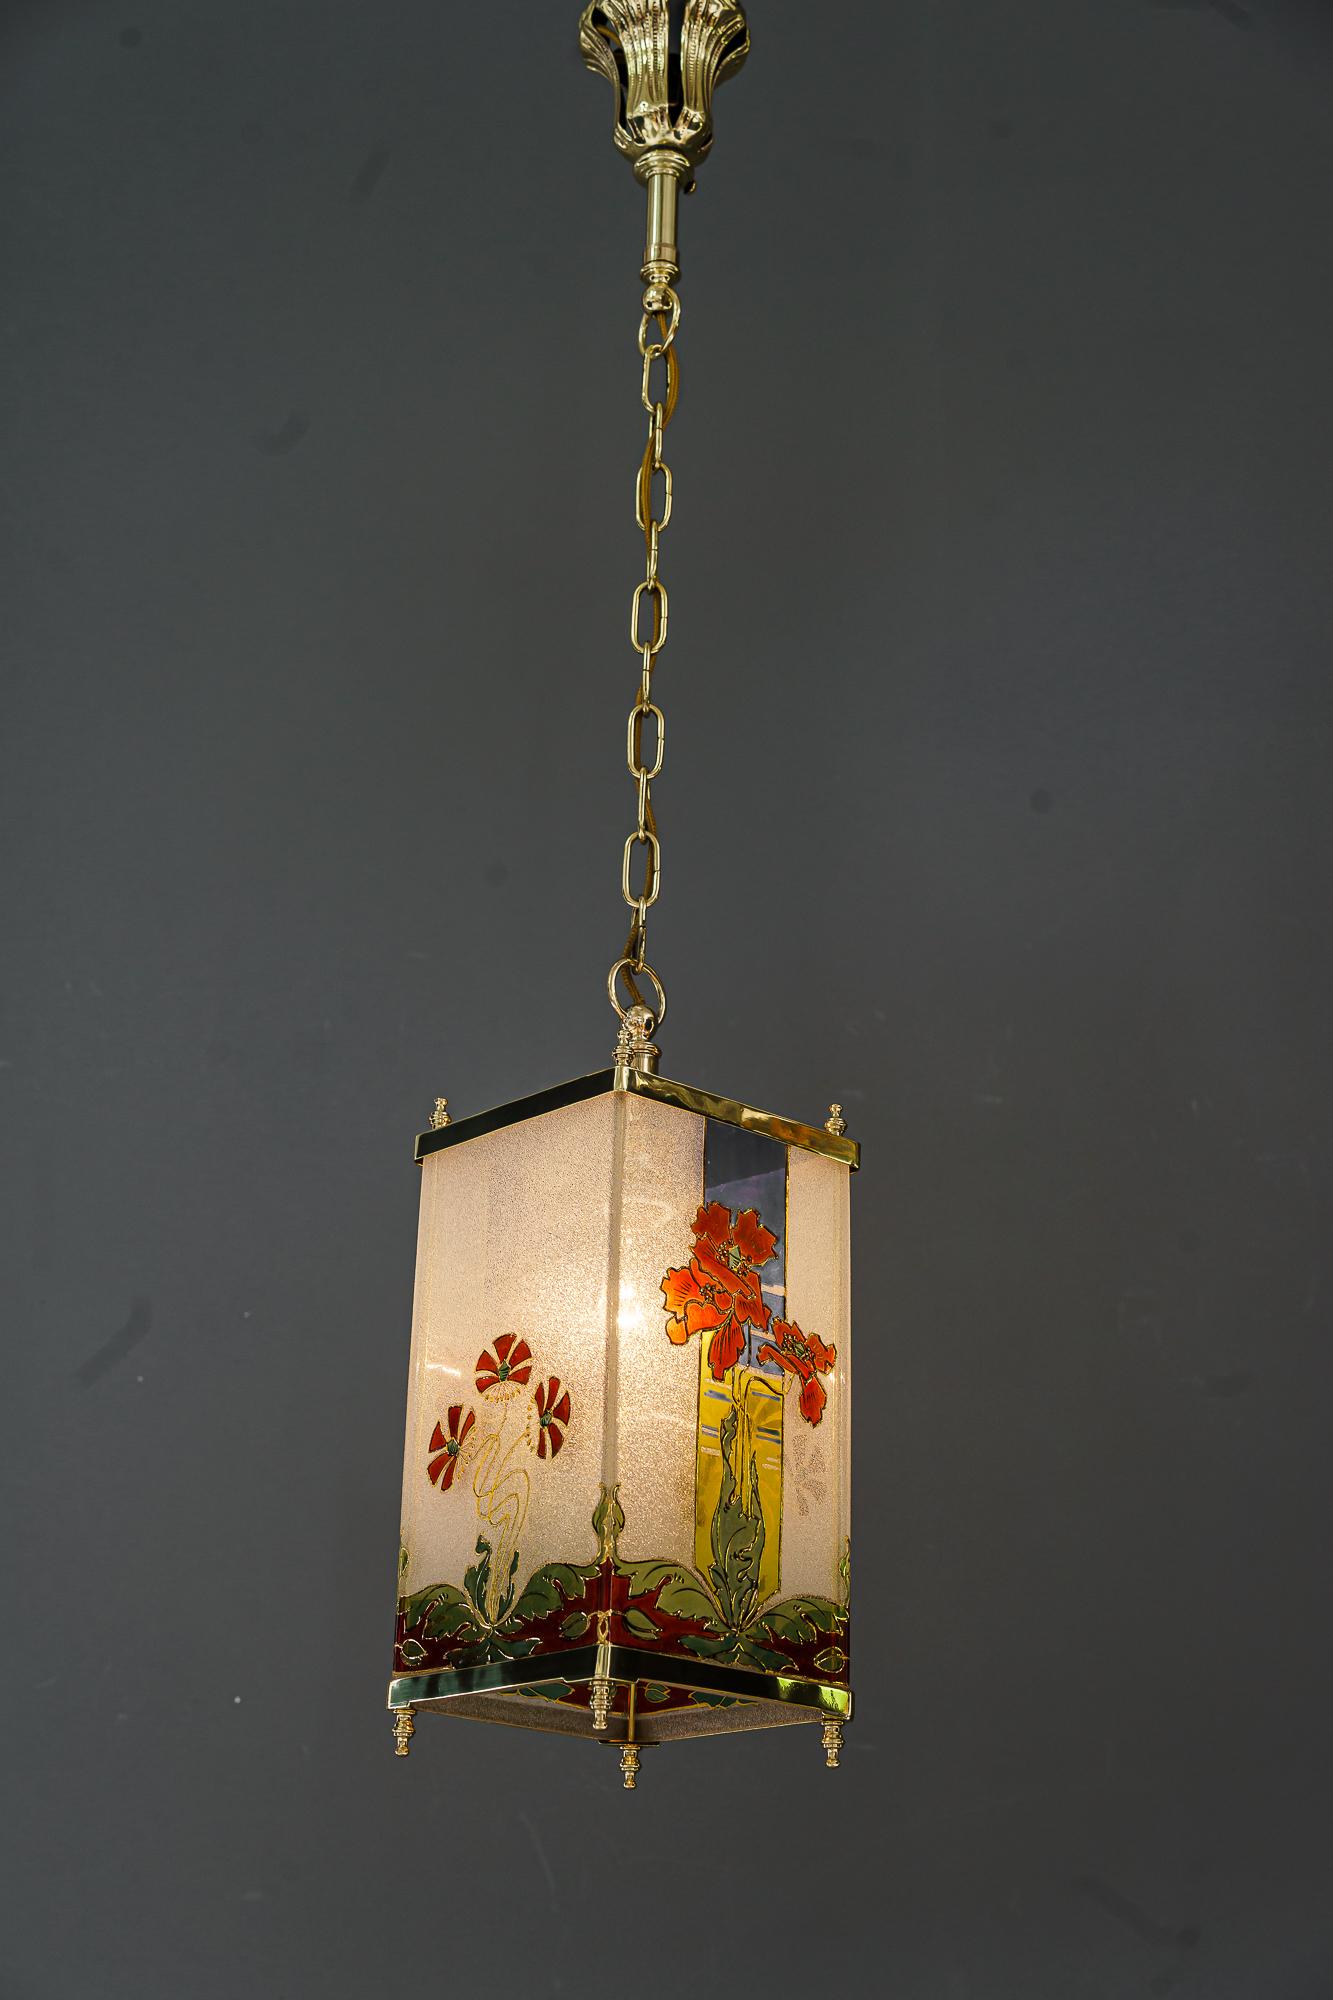 Jugendstil pendant vienna around 1903
Brass polished and stove enameled
Original antique glass (painted).